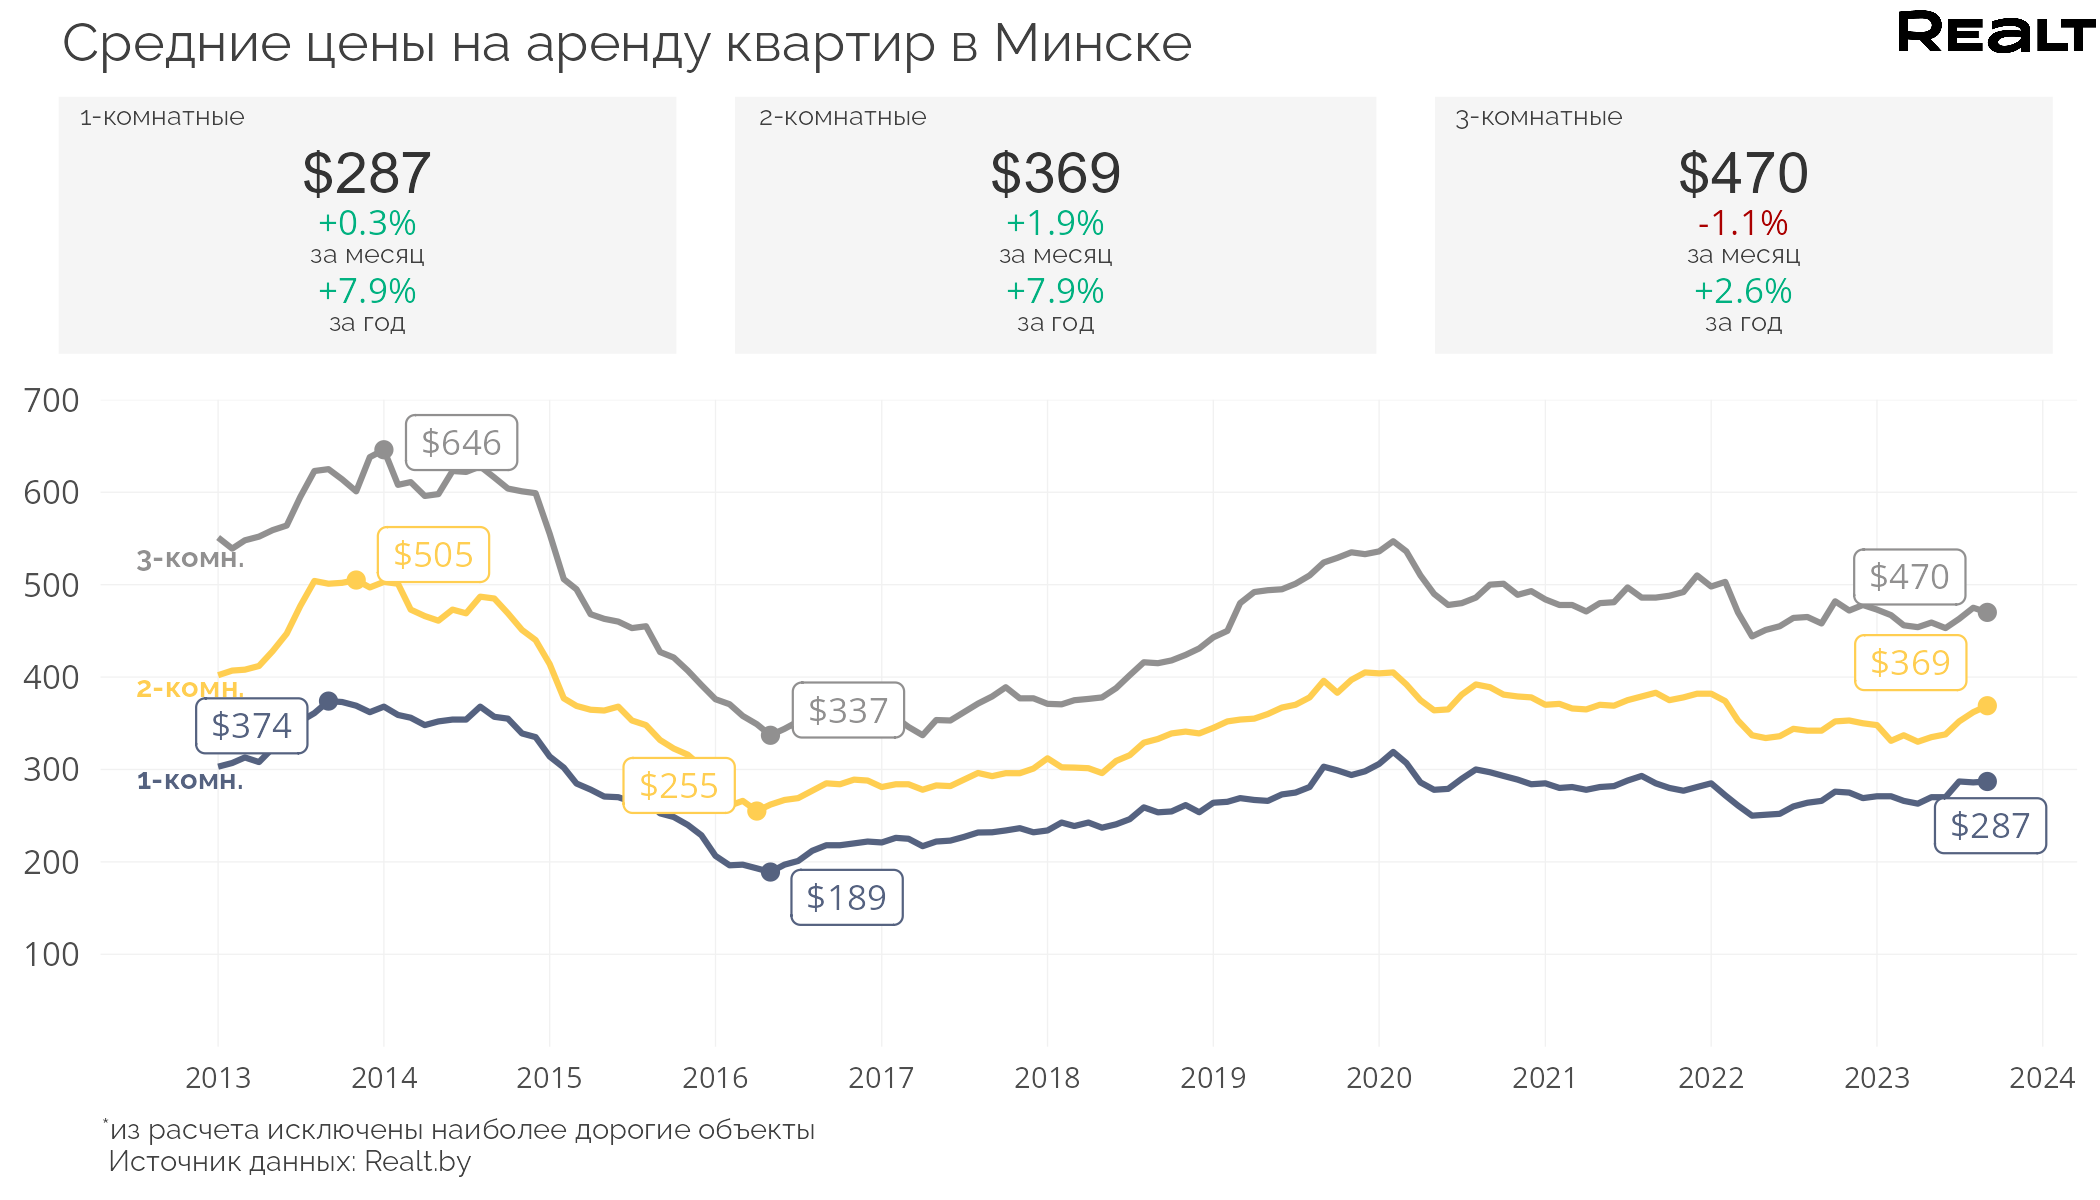 Предложение упало, а цены? Что происходит с арендой квартир в Минске (аналитика Realt)